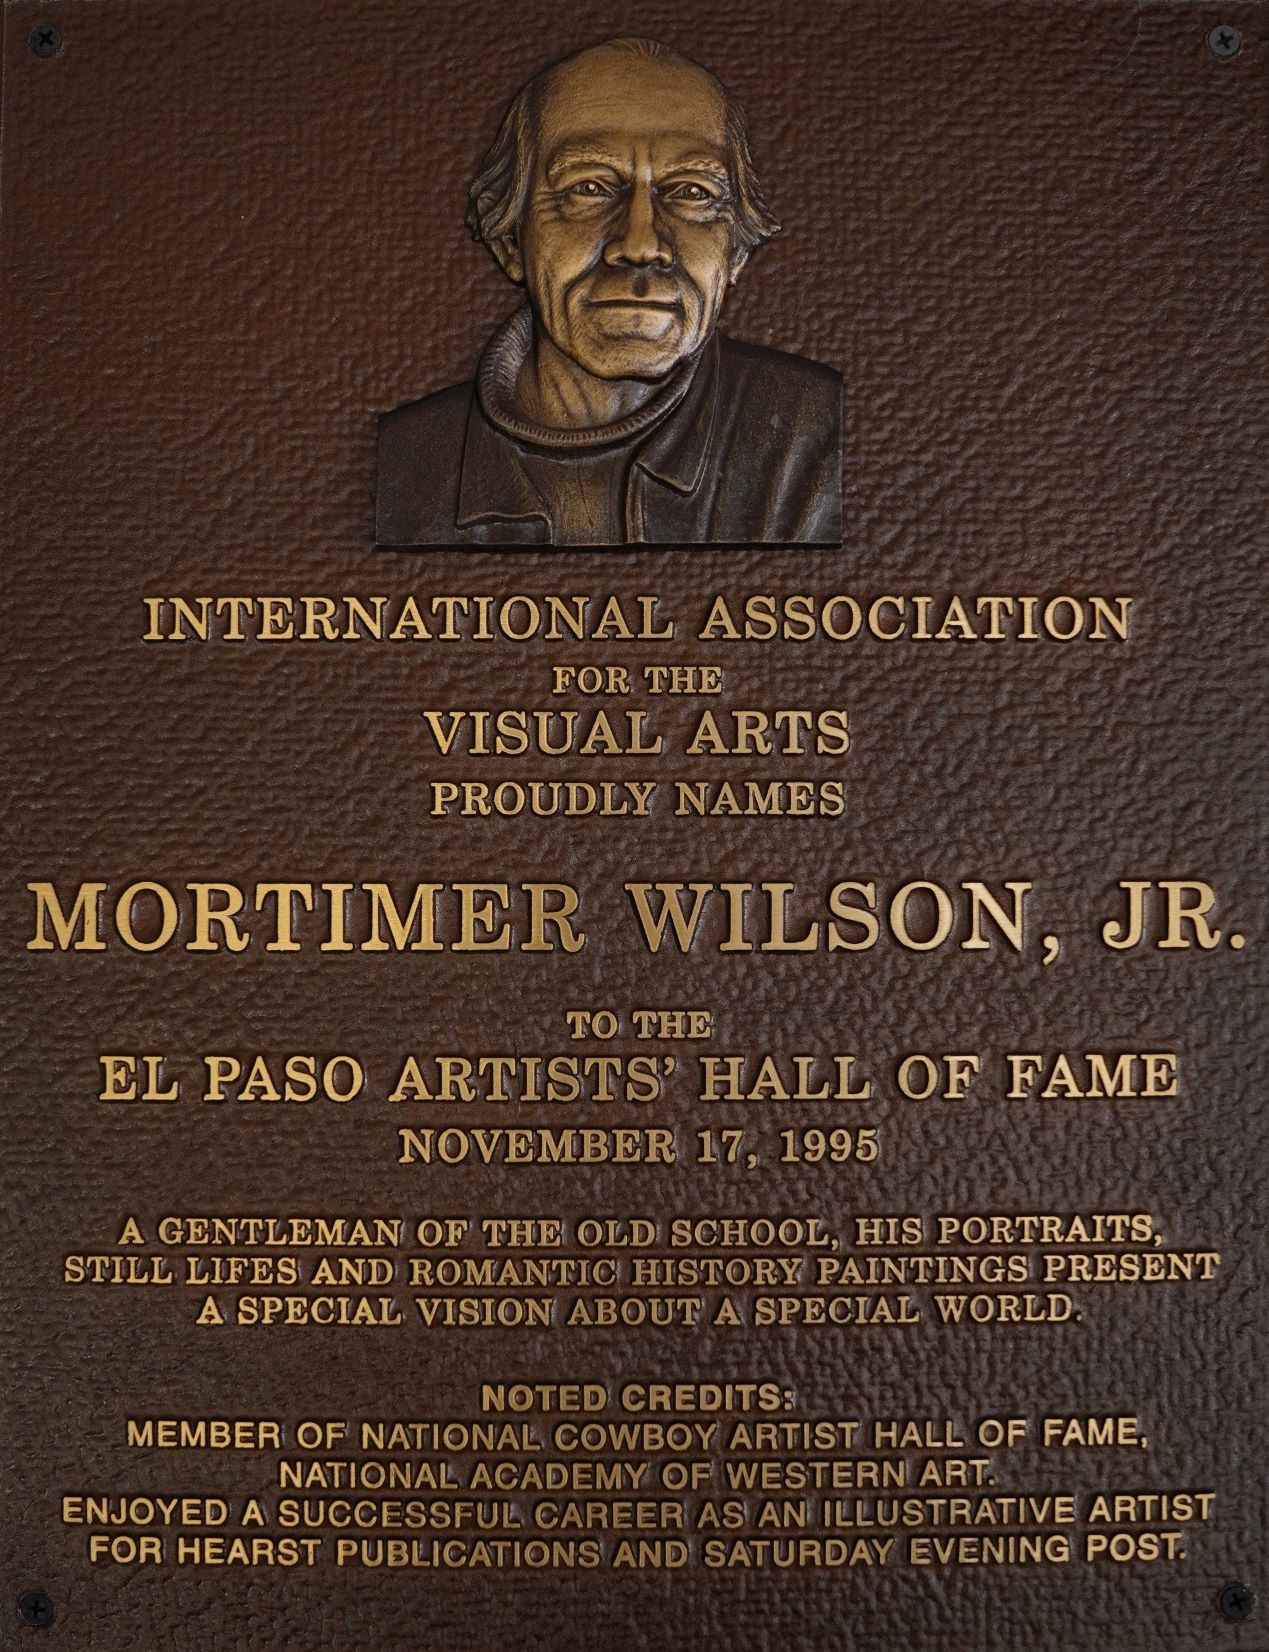 Wilson, Jr